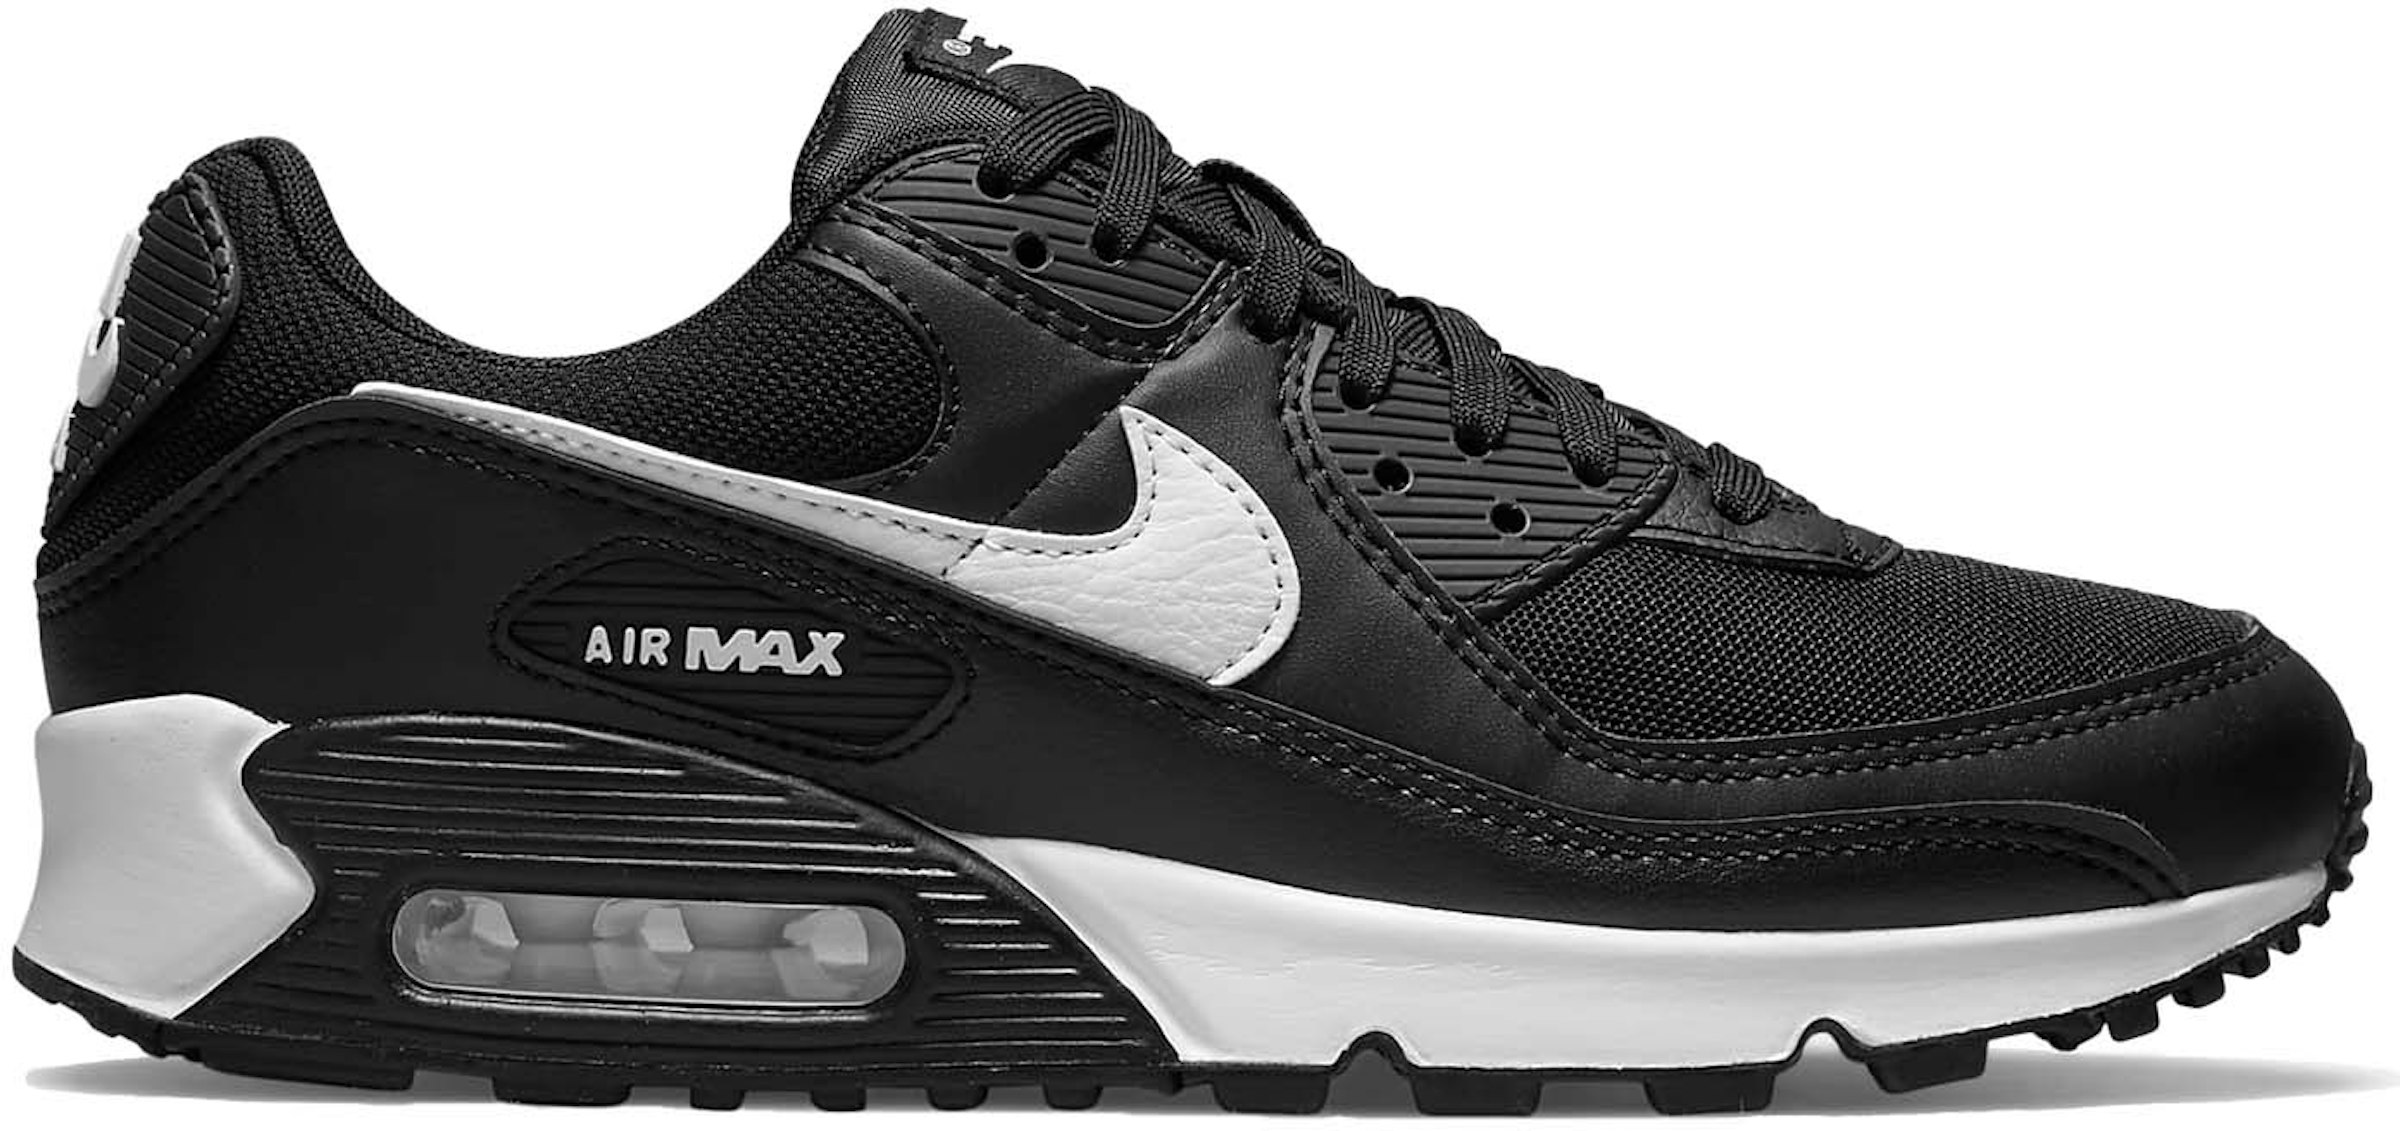 Oportuno densidad Avanzar Nike Air Max 90 Black White (Women's) - DH8010-002 - US